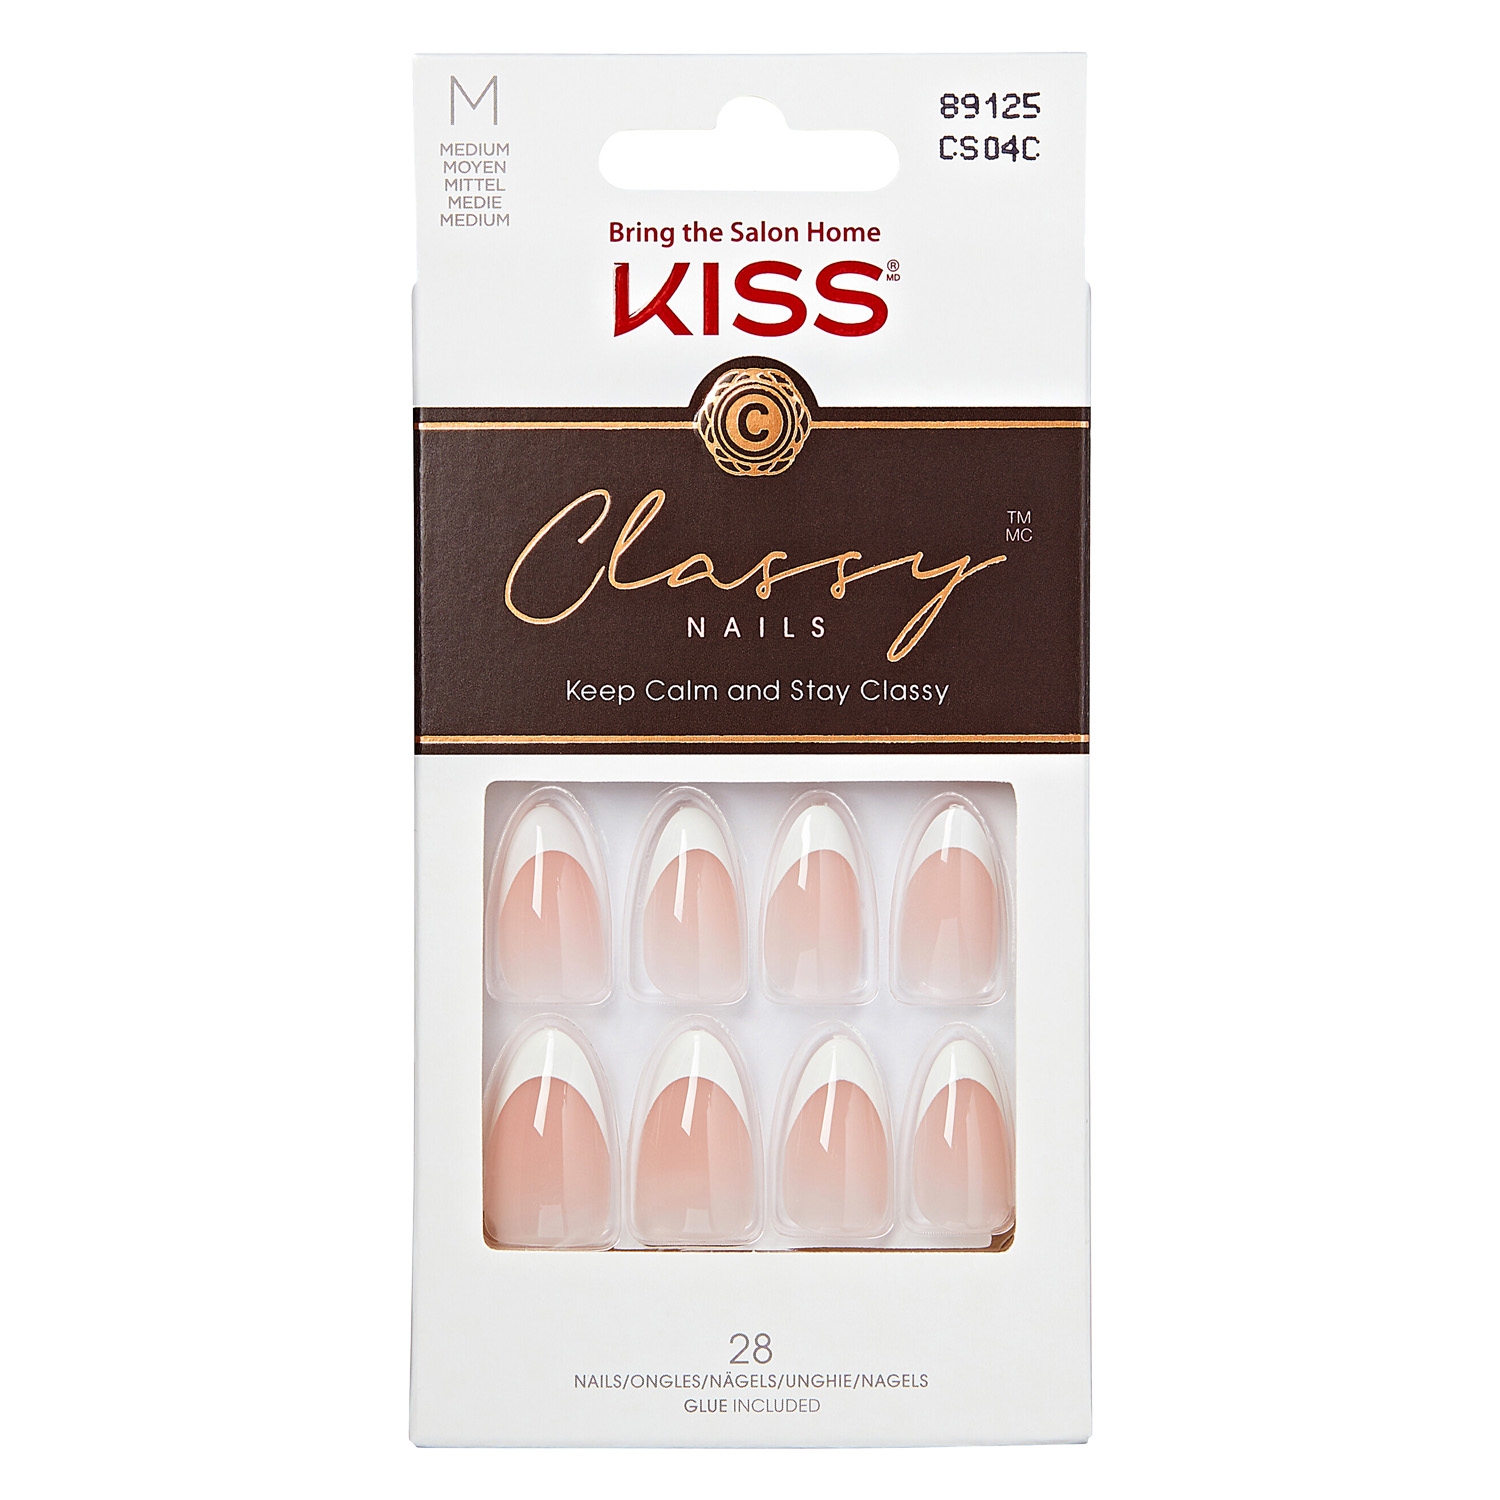 Produktbild von KISS Nails - Classy French Dashing